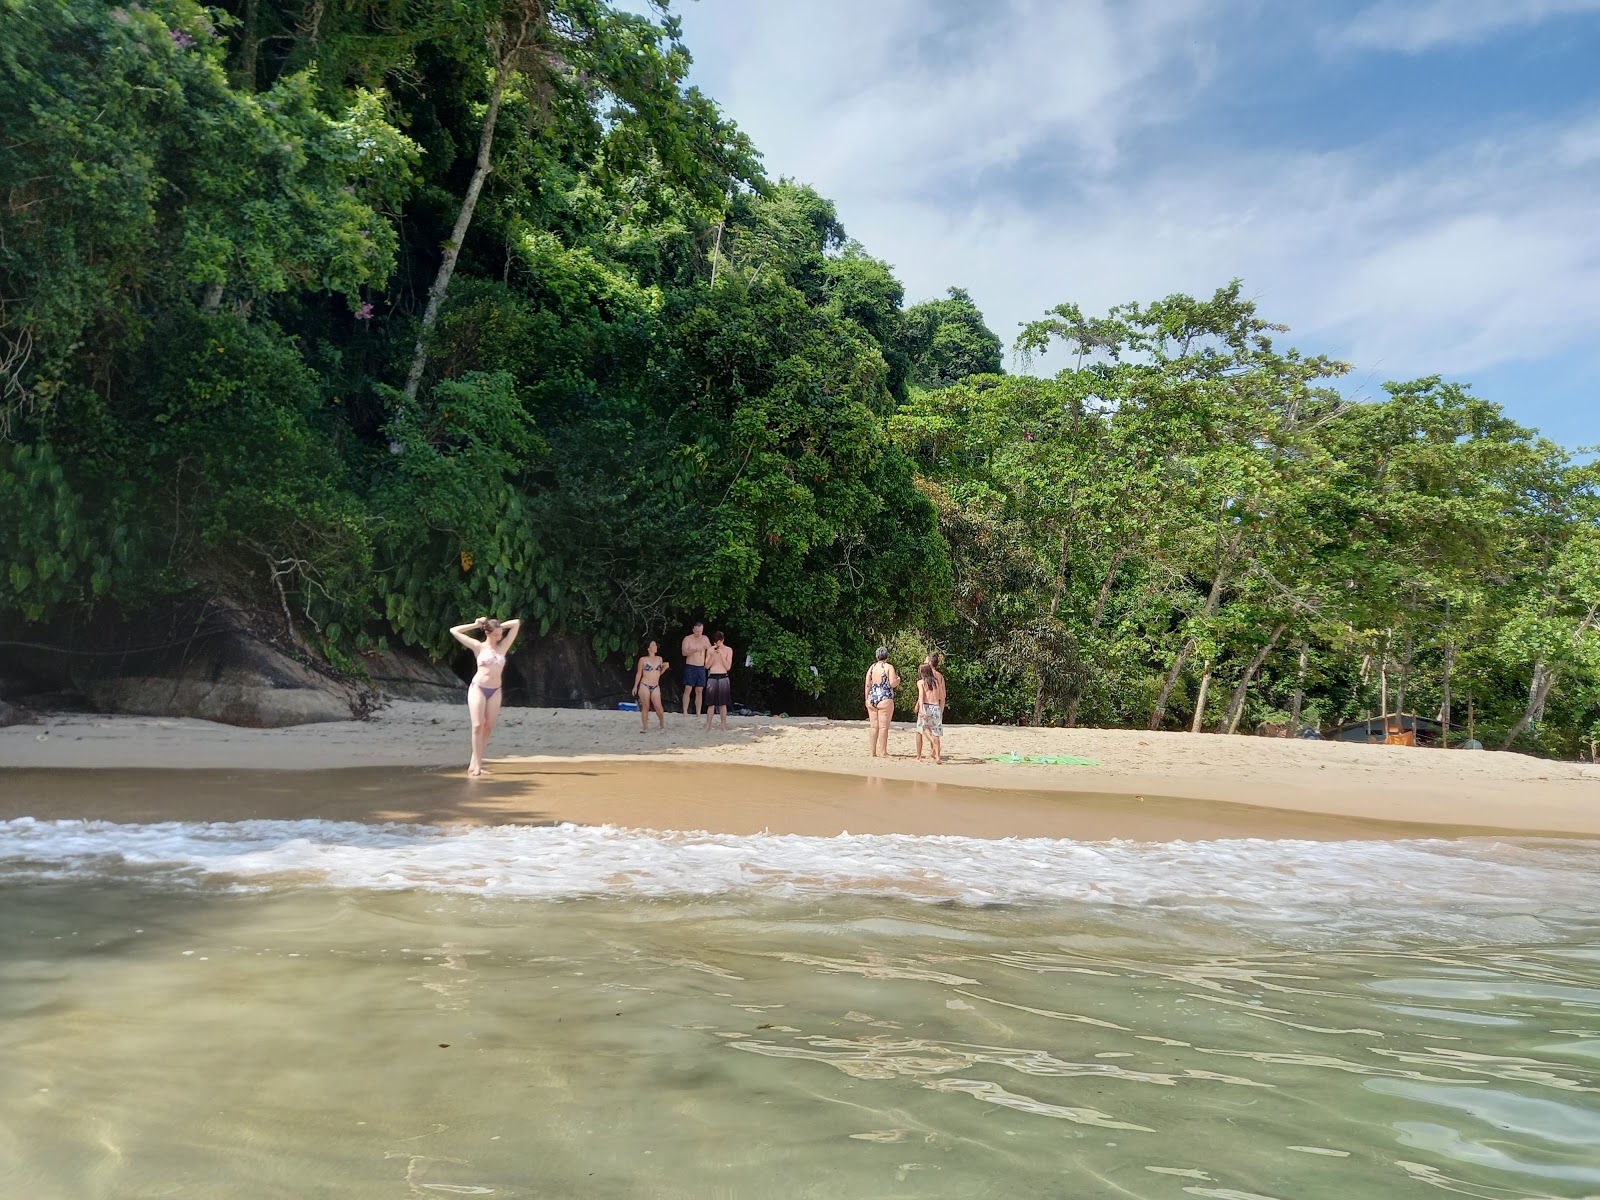 Photo of Ilha do Prumirim Beach - popular place among relax connoisseurs